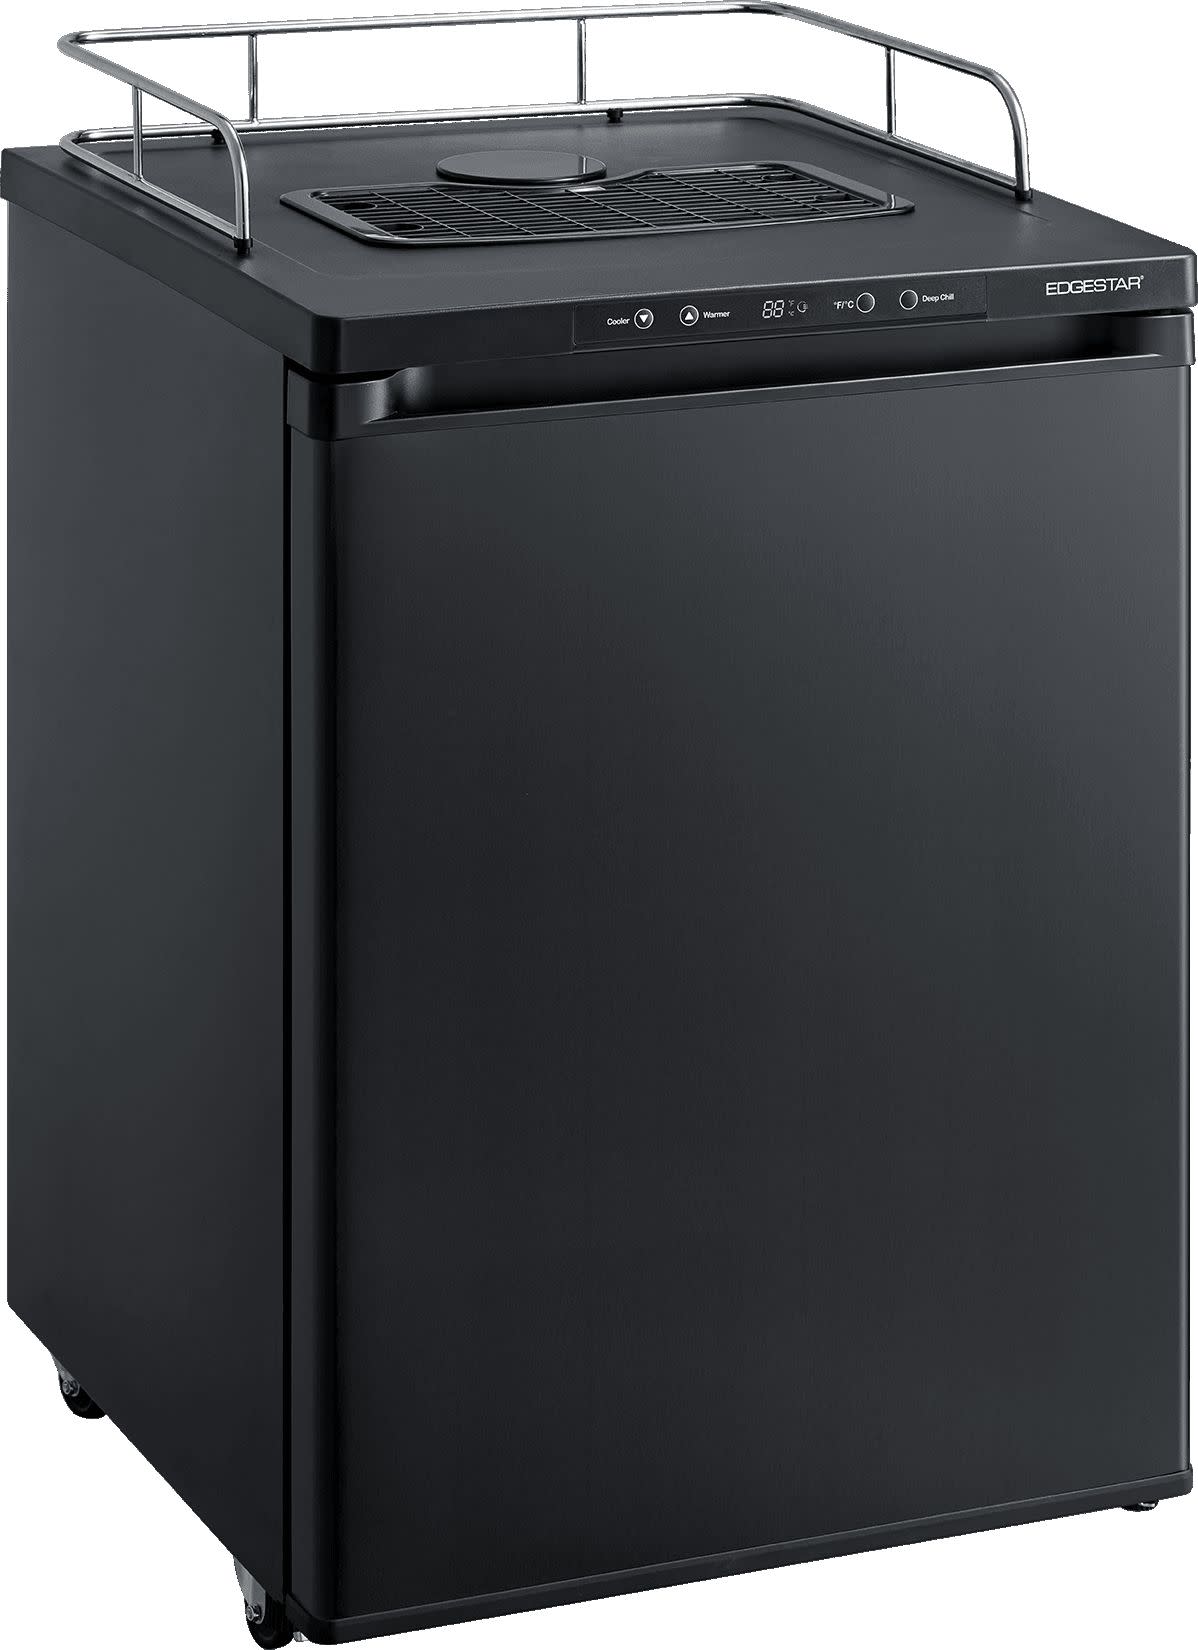 Details About Edgestar Br3002 24 Inch Wide Kegerator Conversion Refrigerator For Full Size Keg